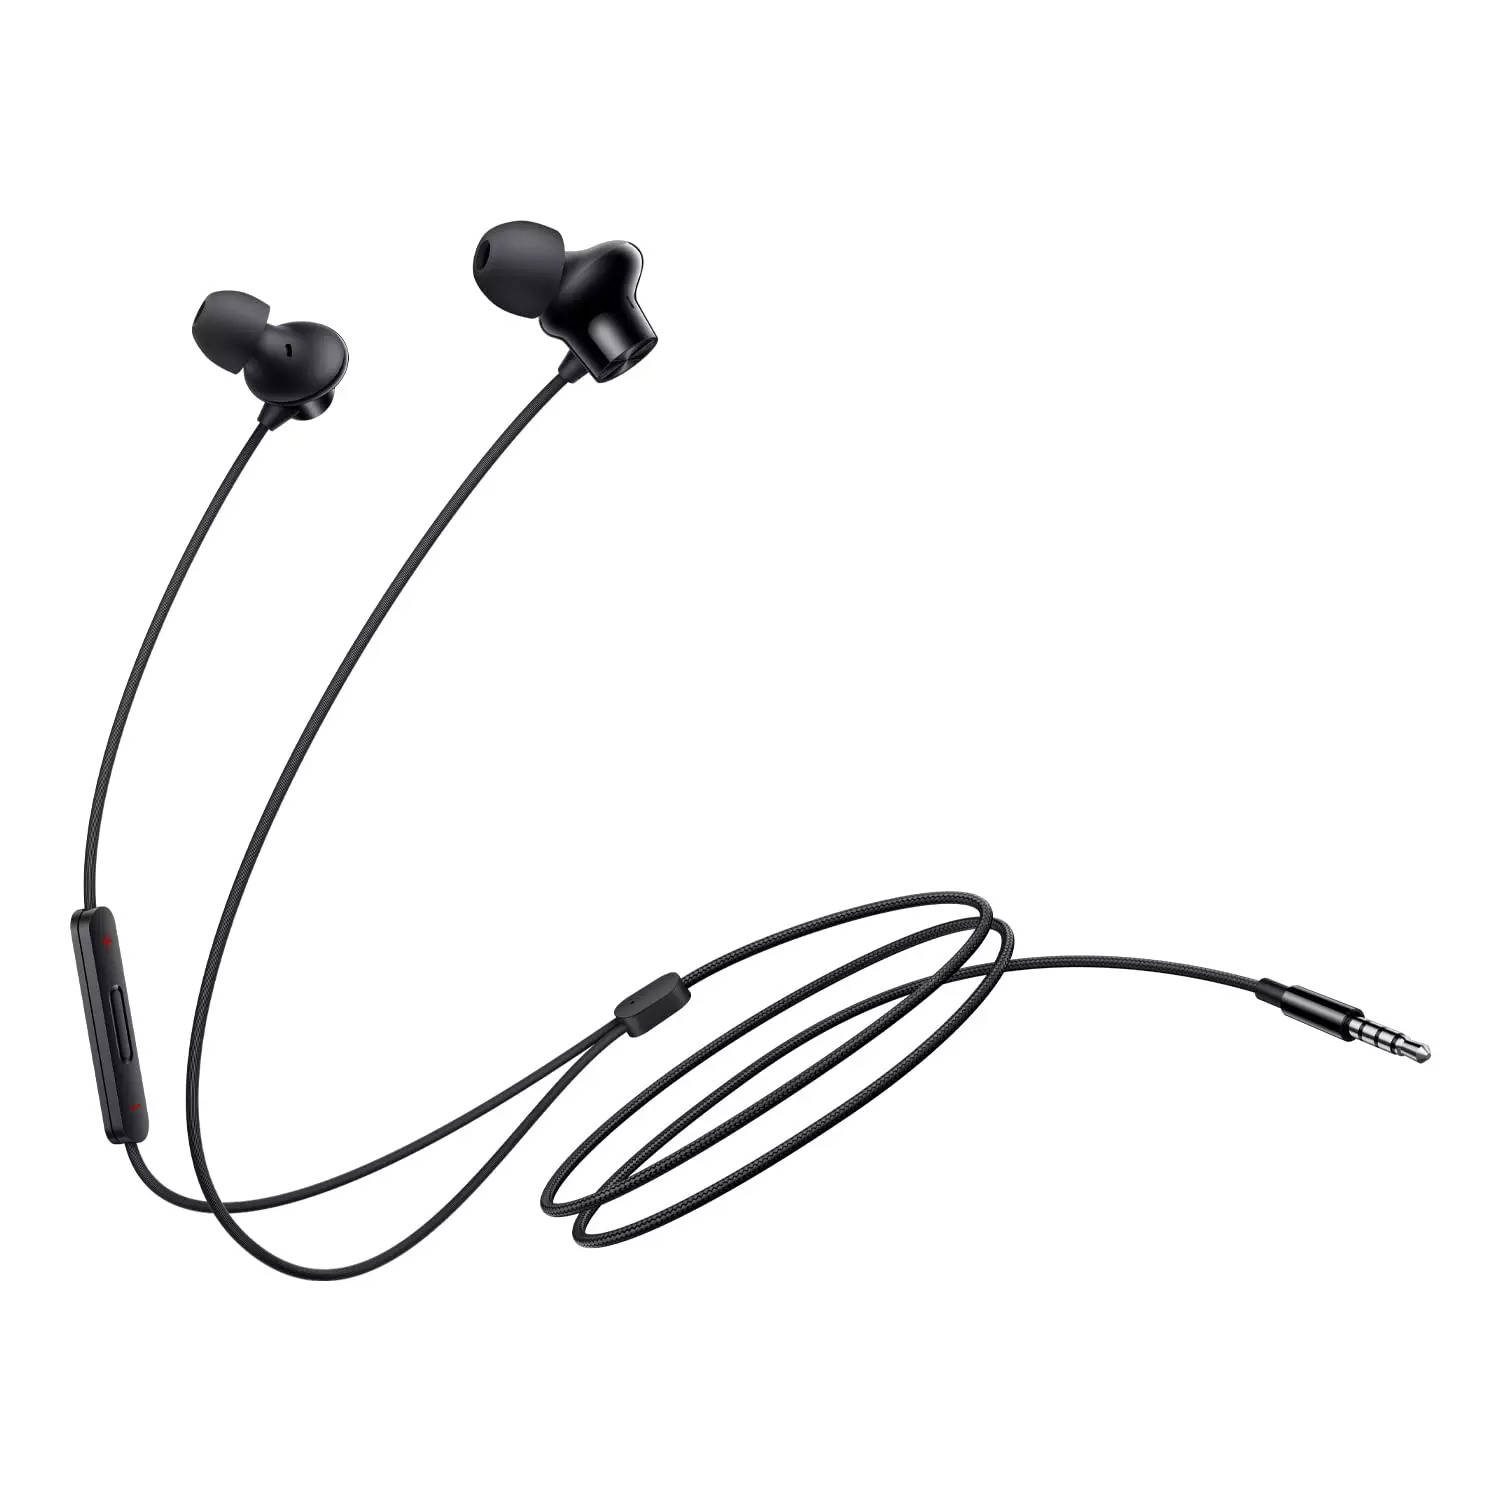 Oneplus Nord Wired earphones